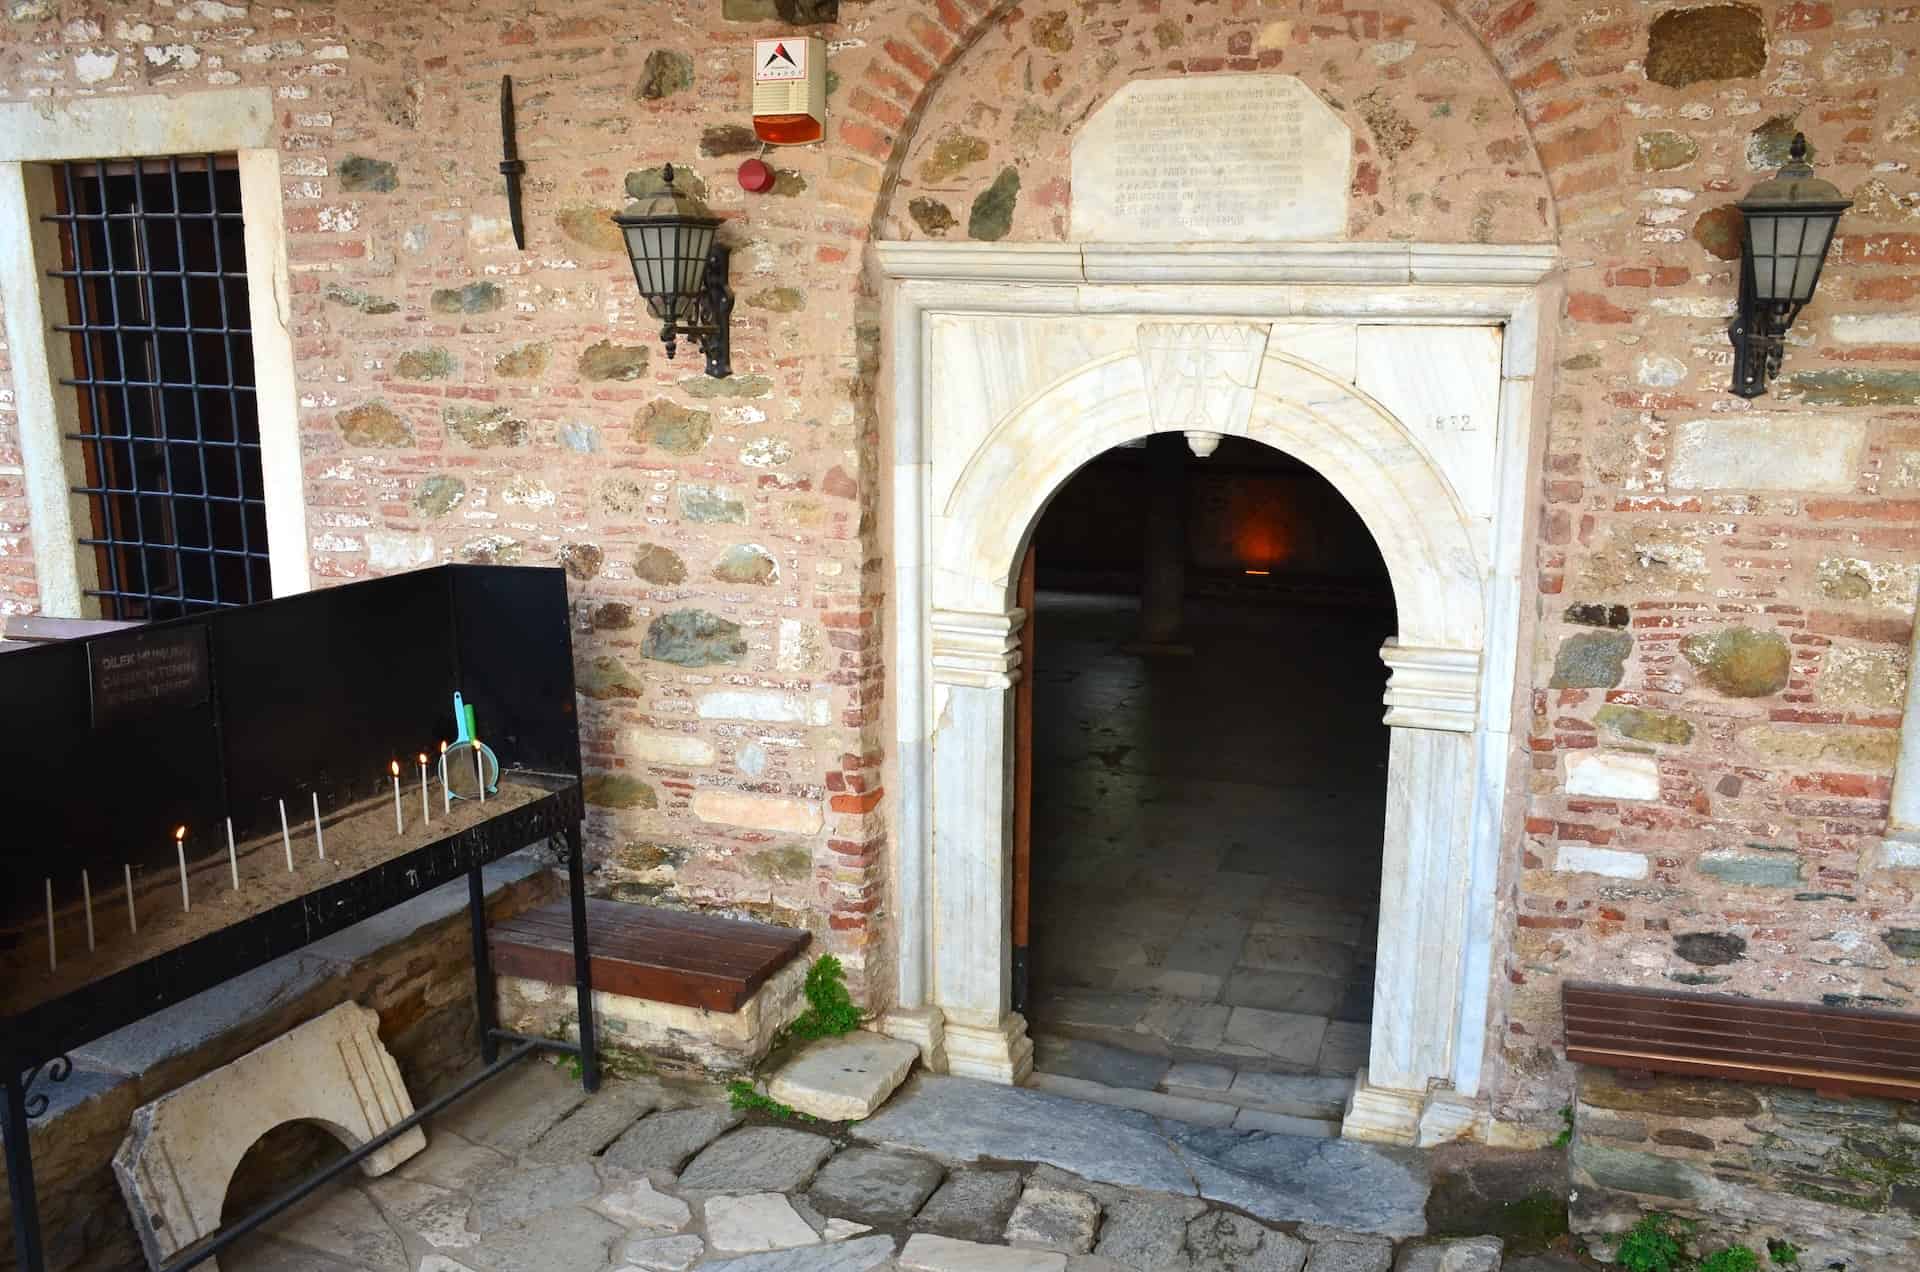 Entrance to the Church of St. John the Baptist in Şirince, Turkey